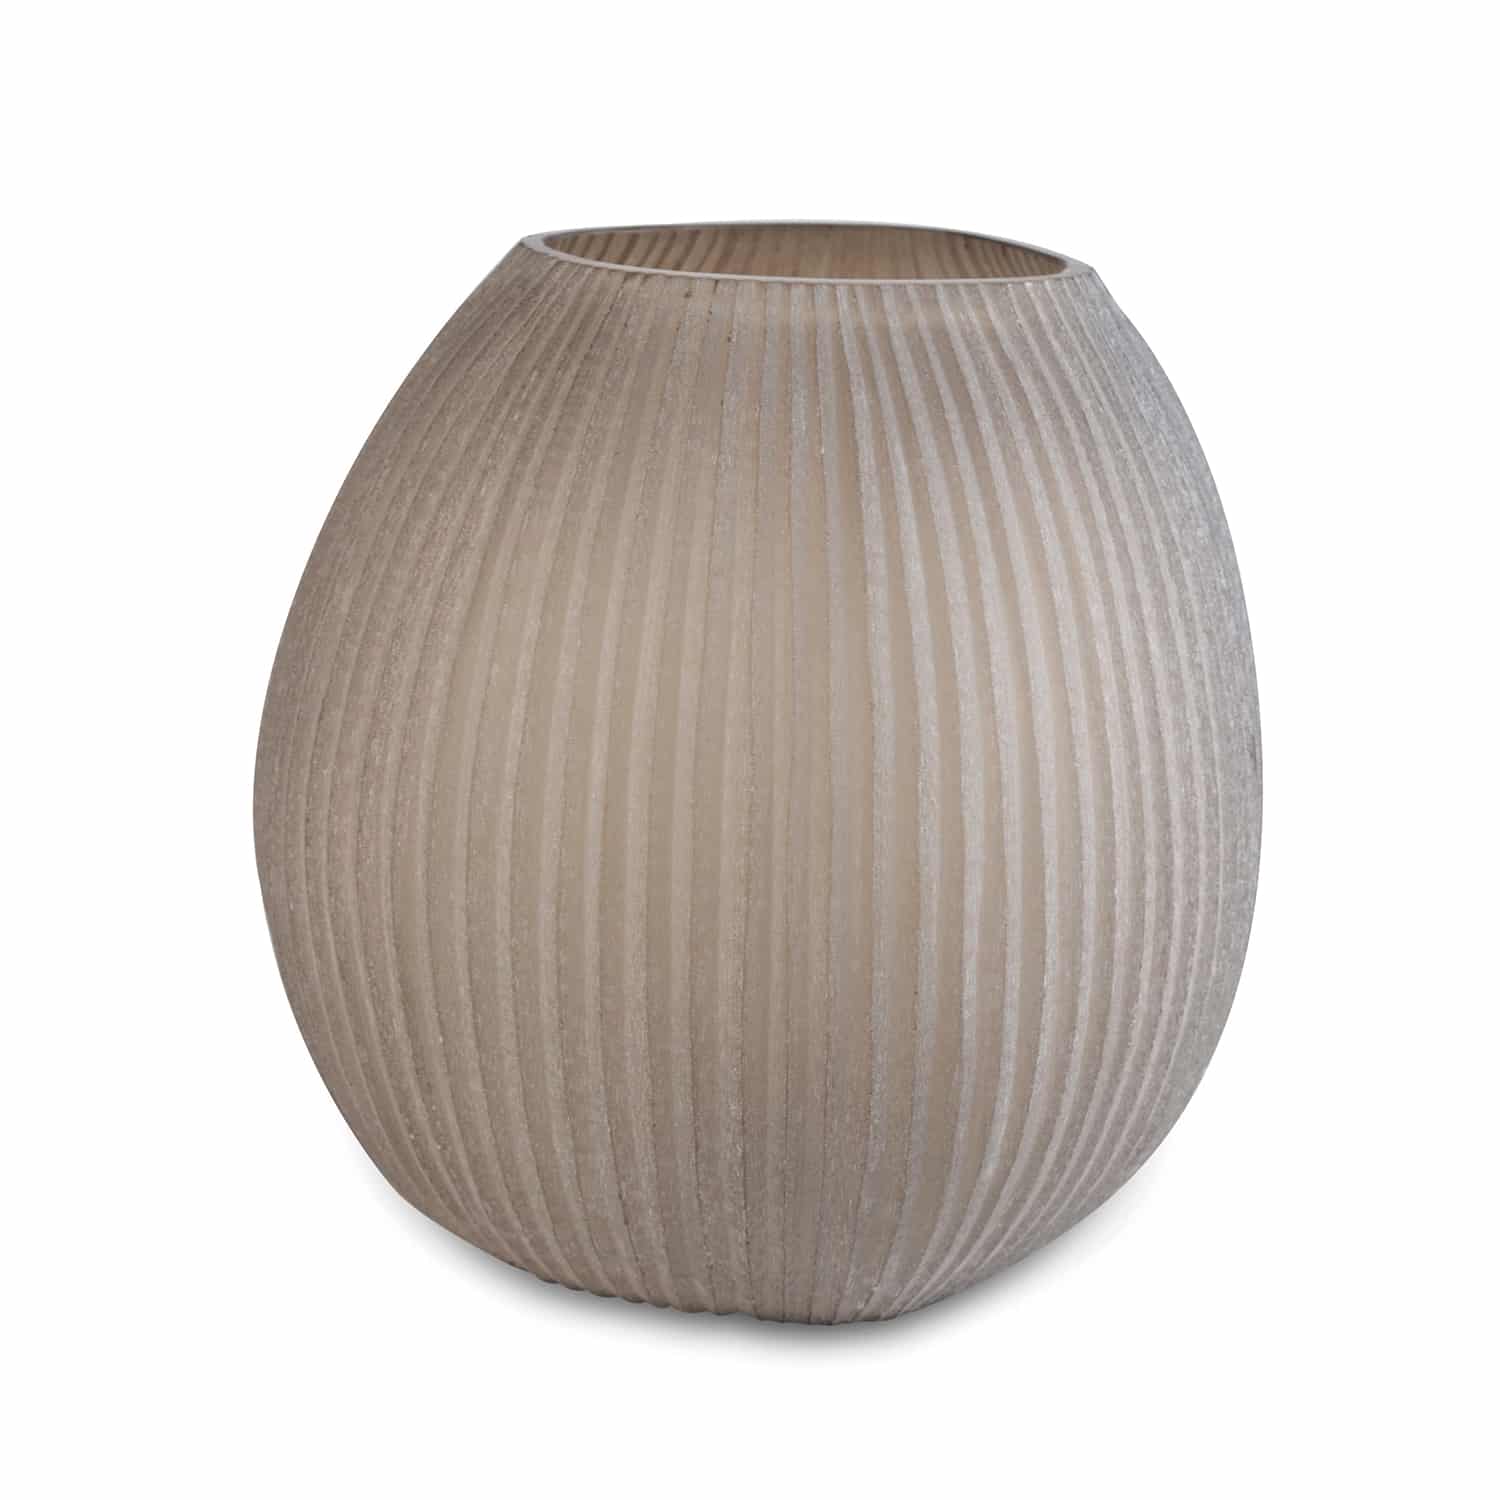 Nagaa Vase Large